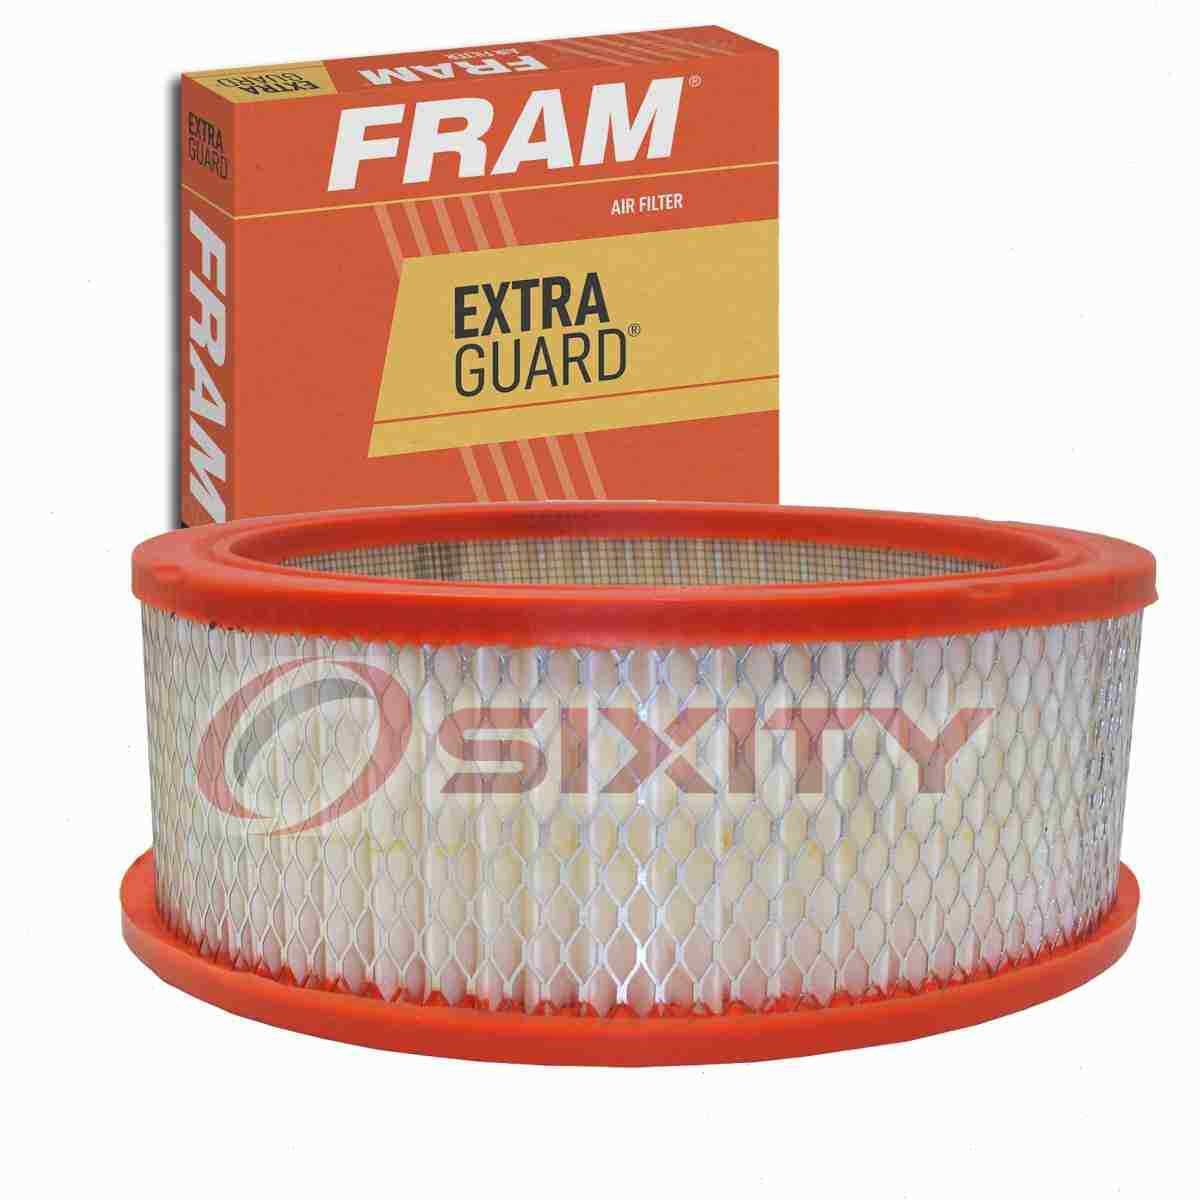 FRAM Extra Guard Air Filter for 1975-1977 Dodge D100 Intake Inlet Manifold qo